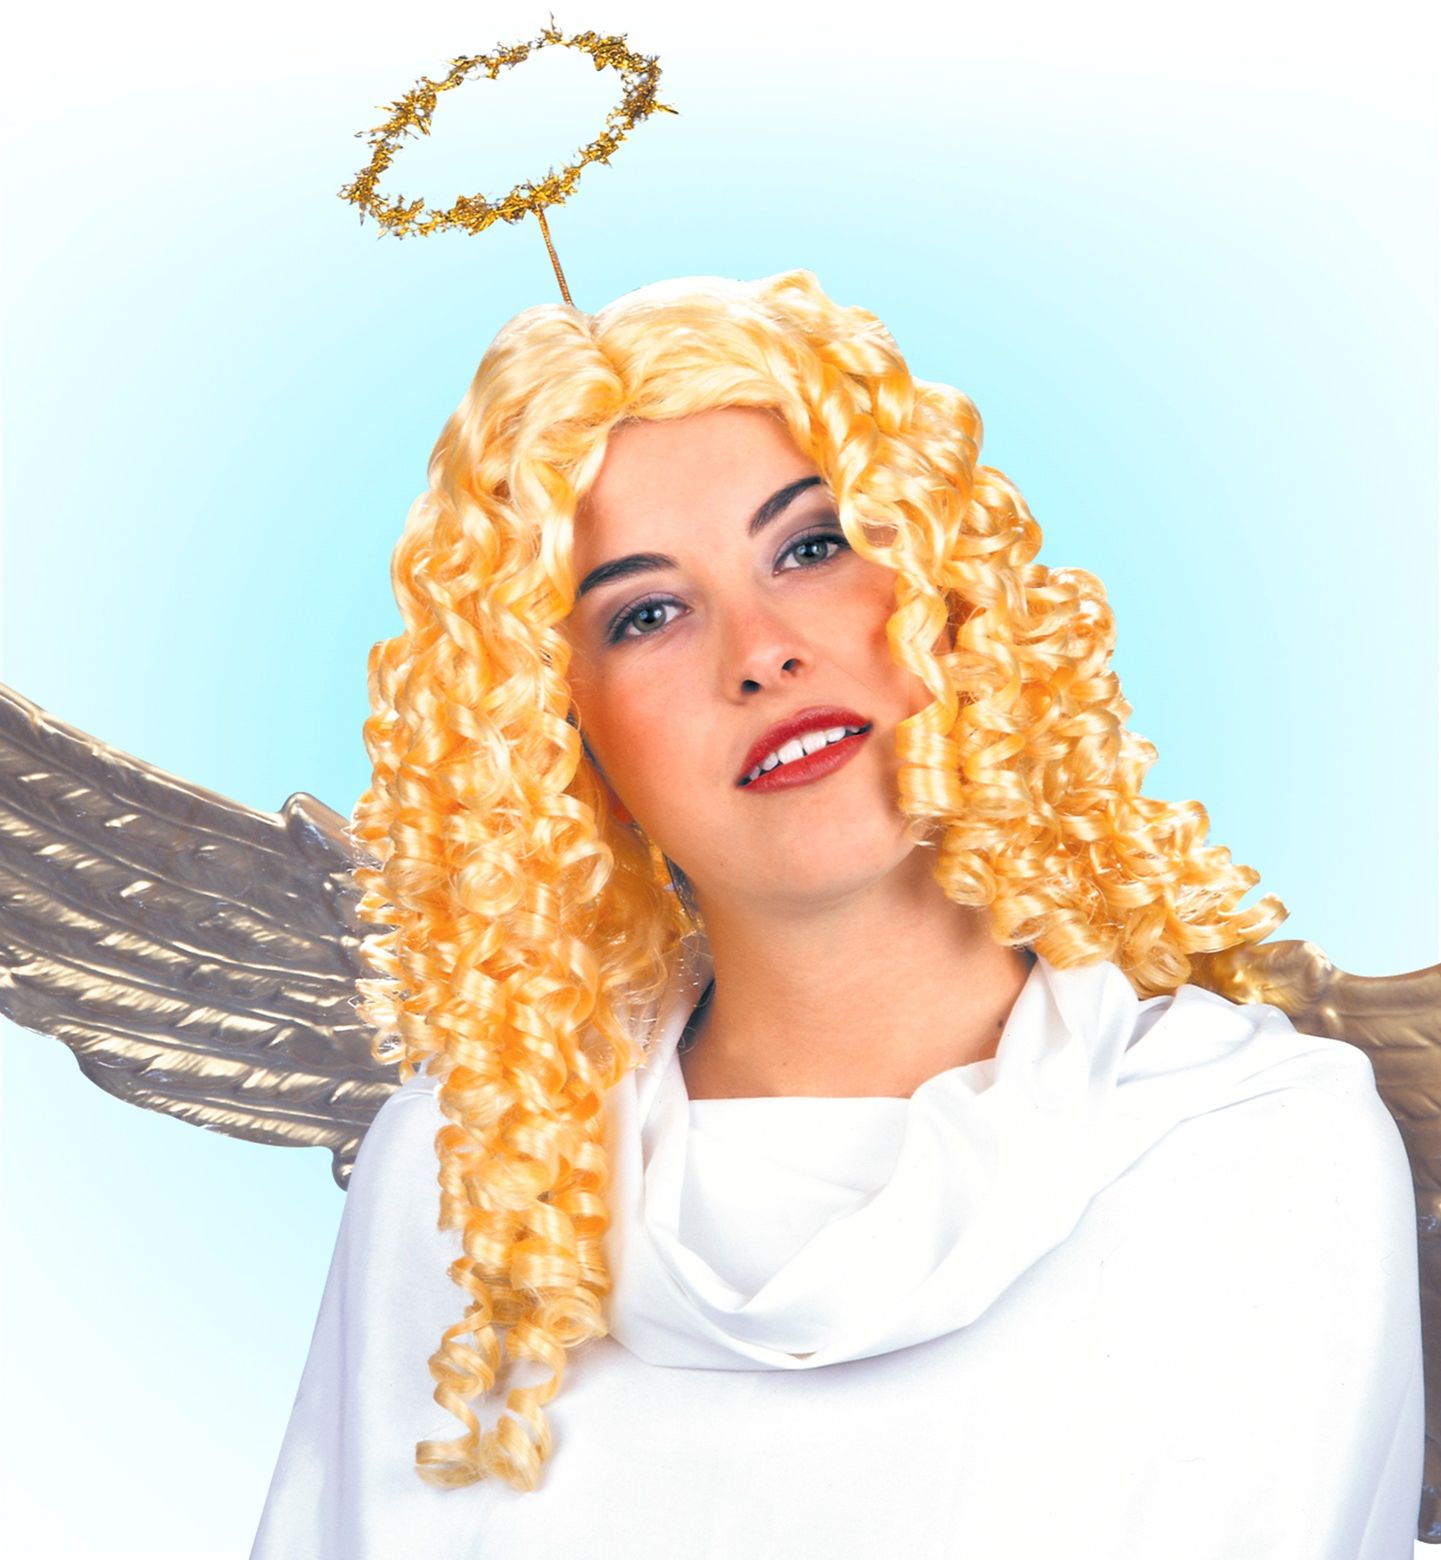 Lyrisch Savant Echter Gouden engel pruik met krullen | Carnavalskleding.nl